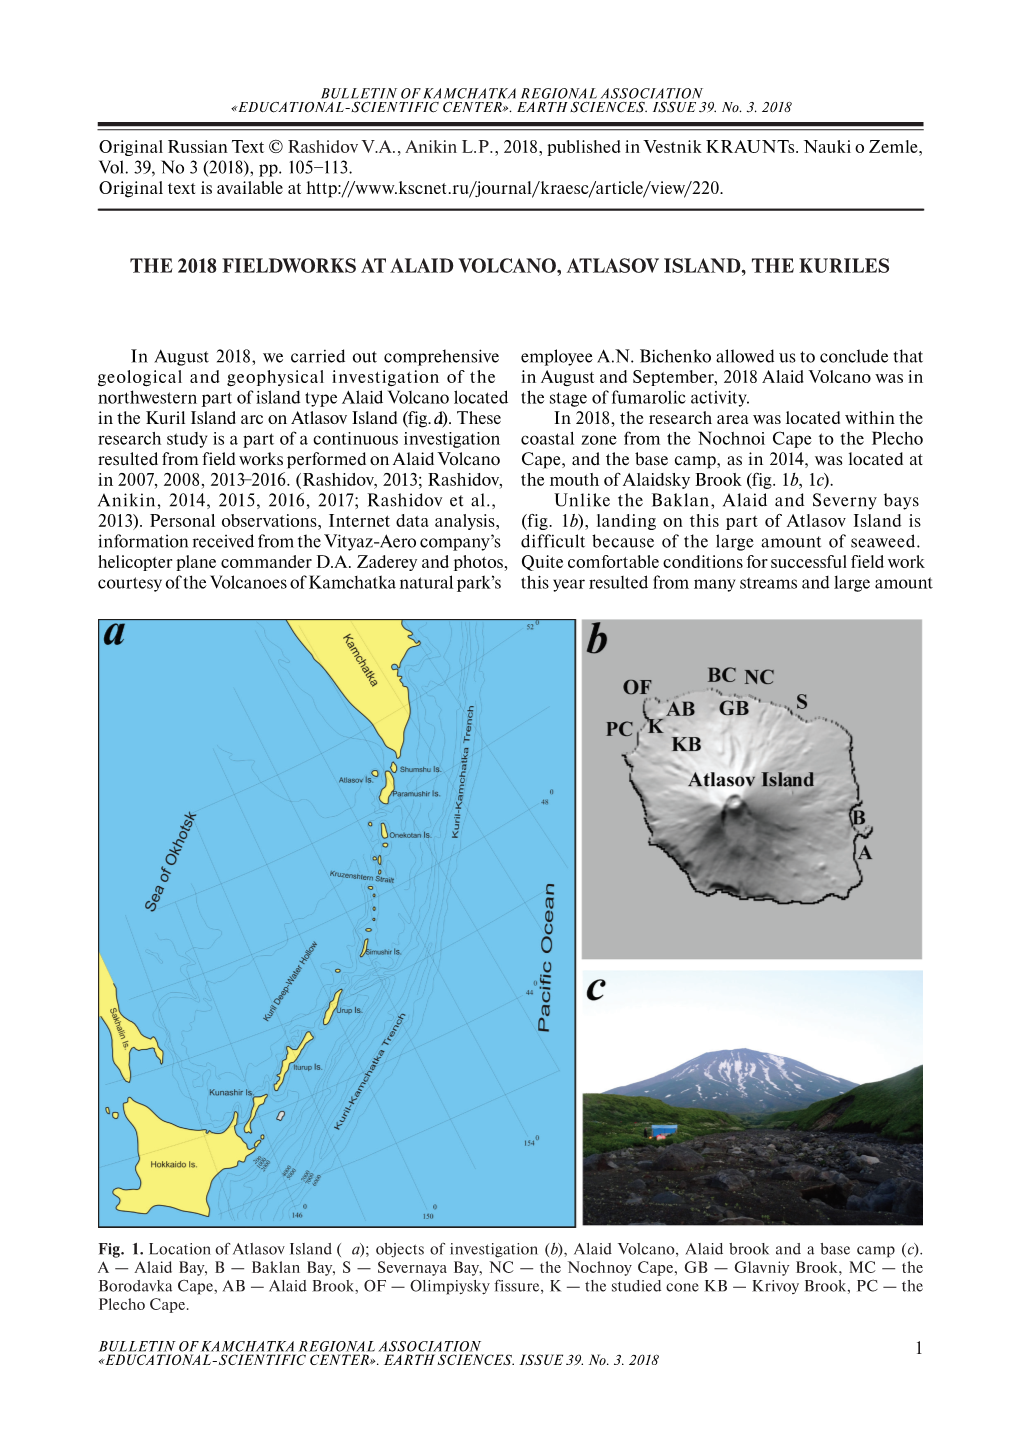 The 2018 Fieldworks at Alaid Volcano, Atlasov Island, the Kuriles